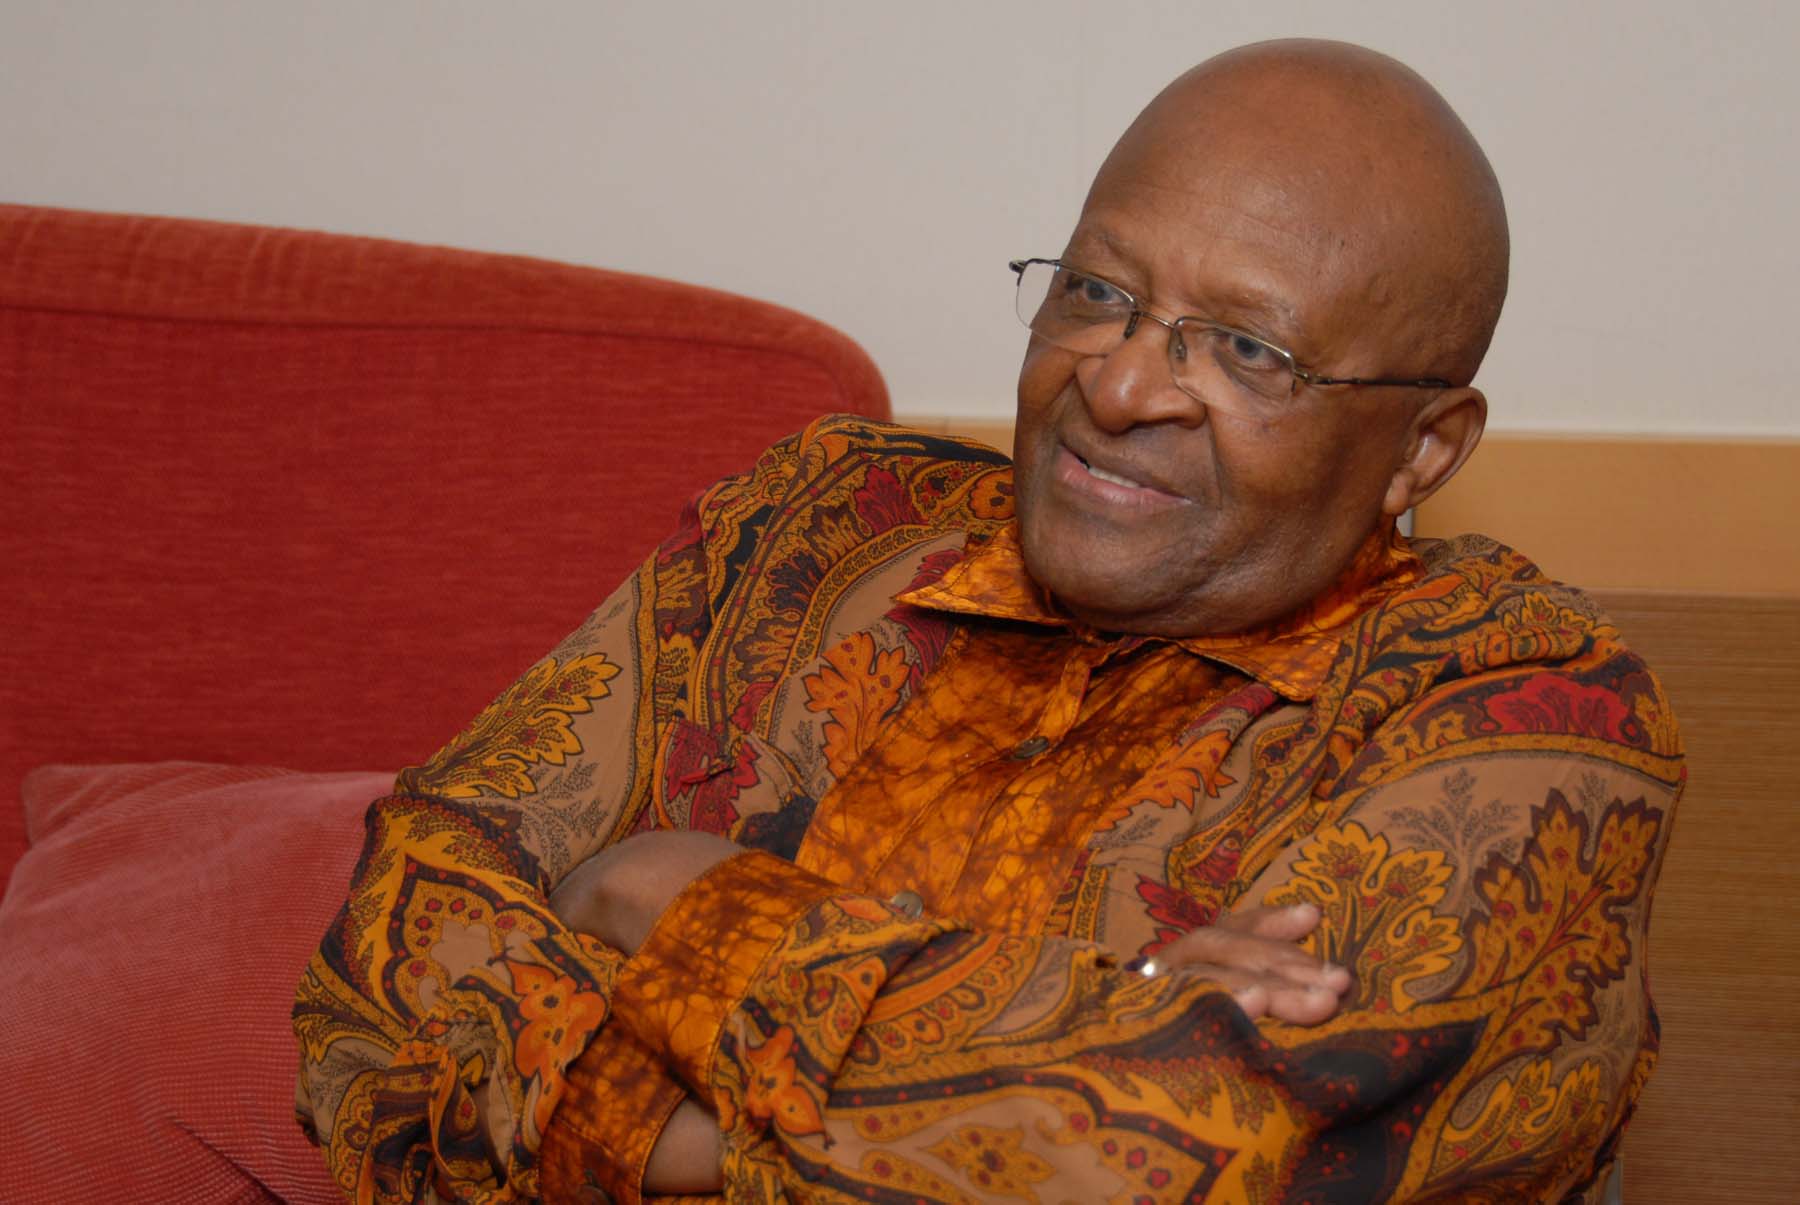 Desmond TuTu chose water cremation